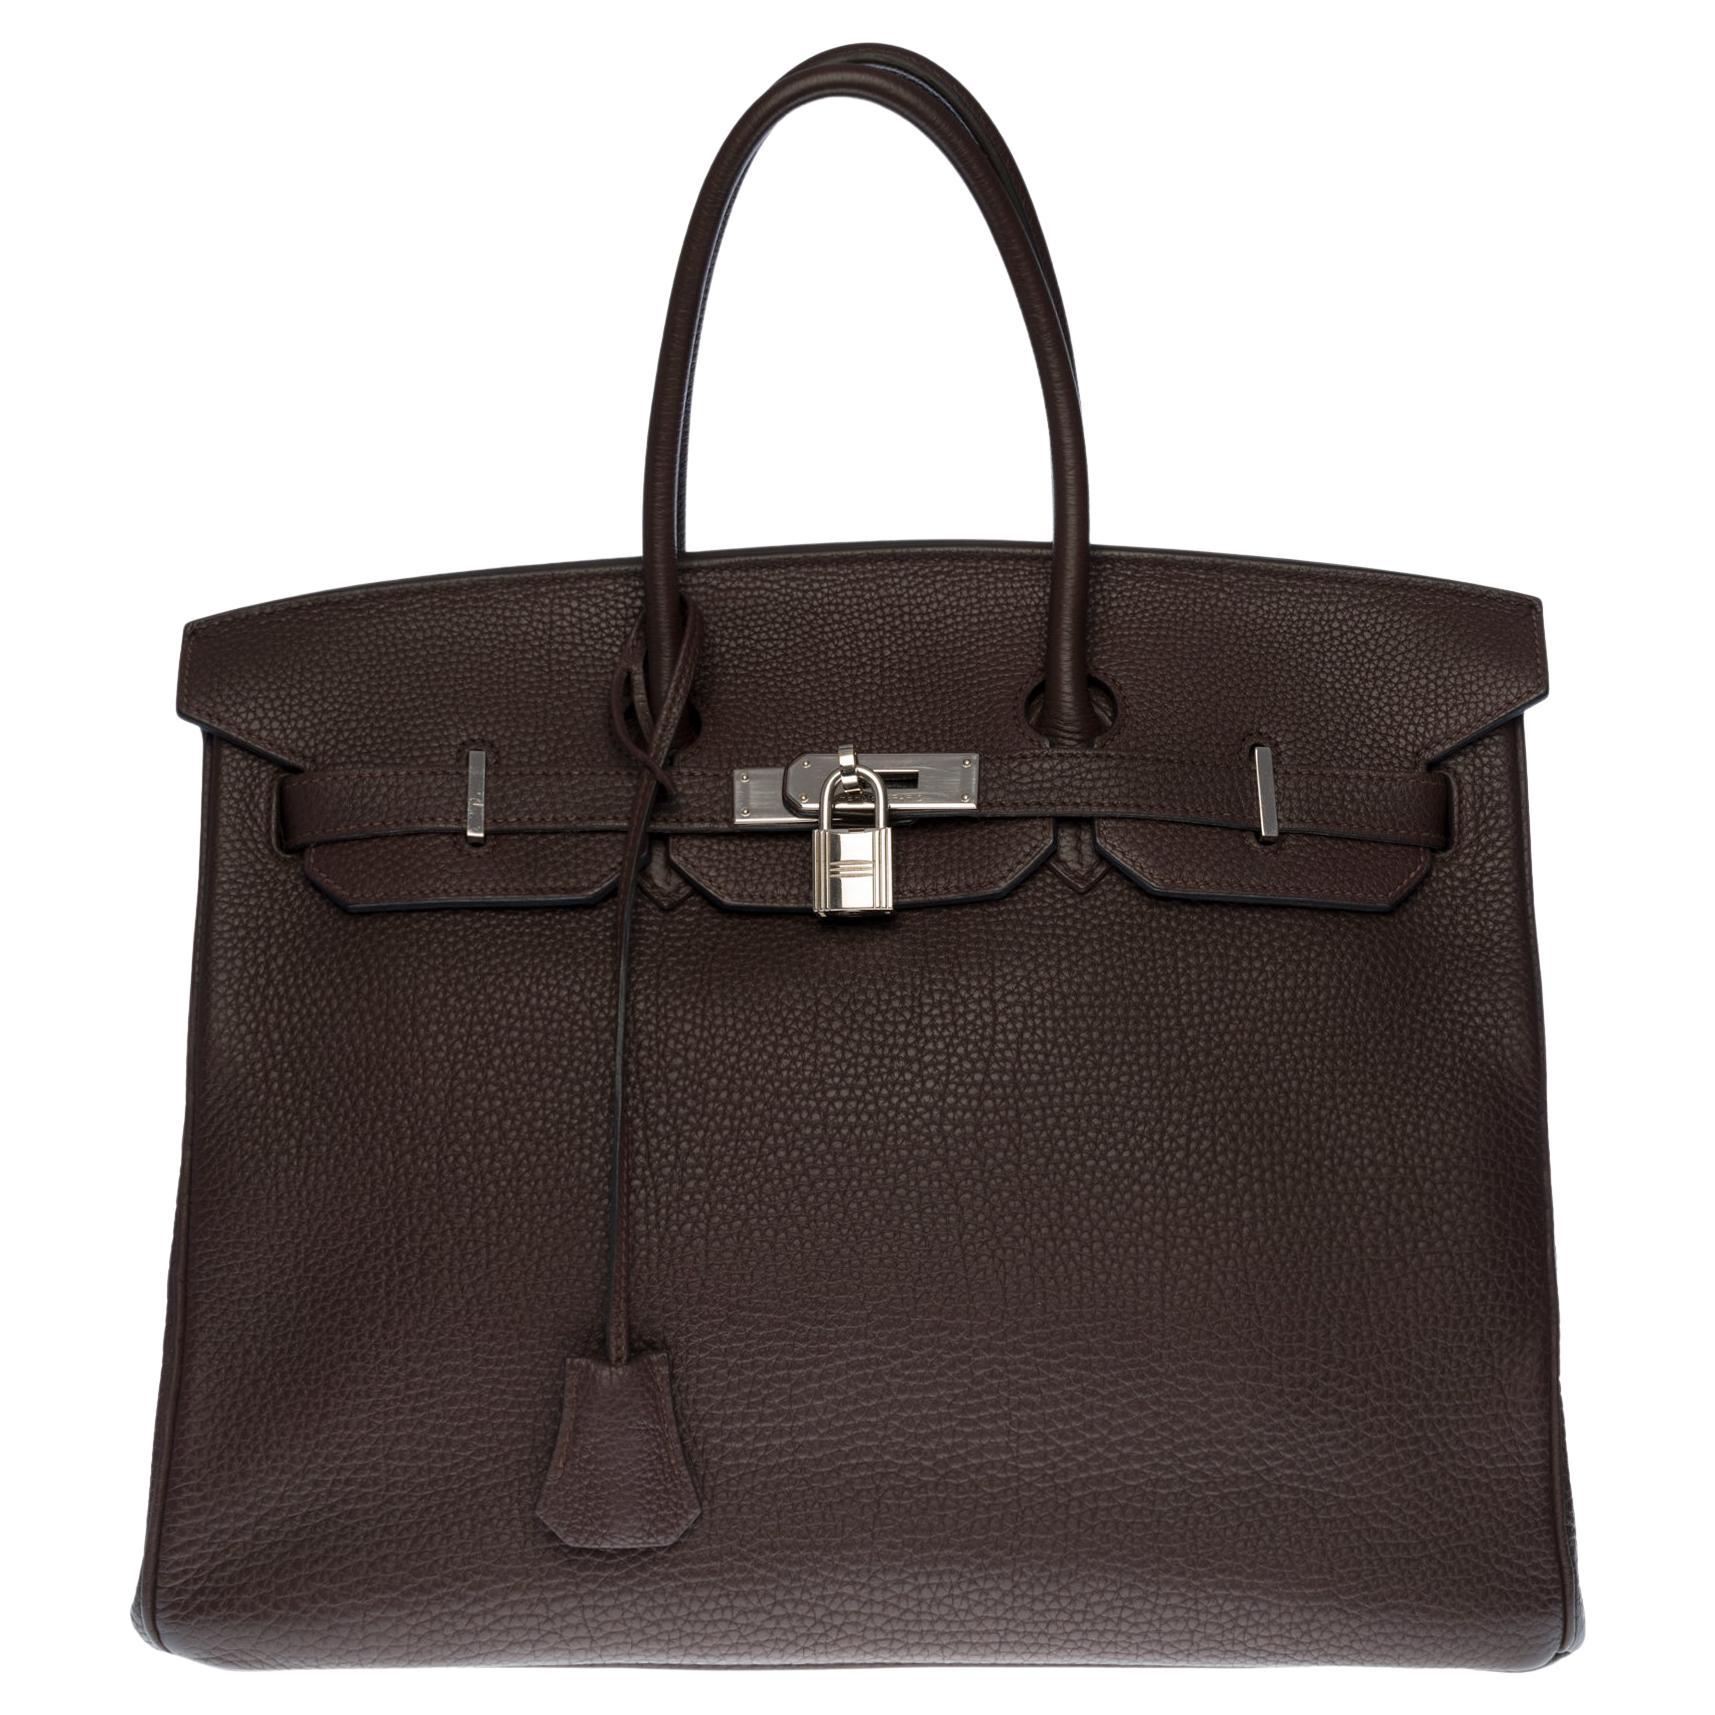 Hermès Birkin 35 handbag in brown Togo leather with silver hardware !